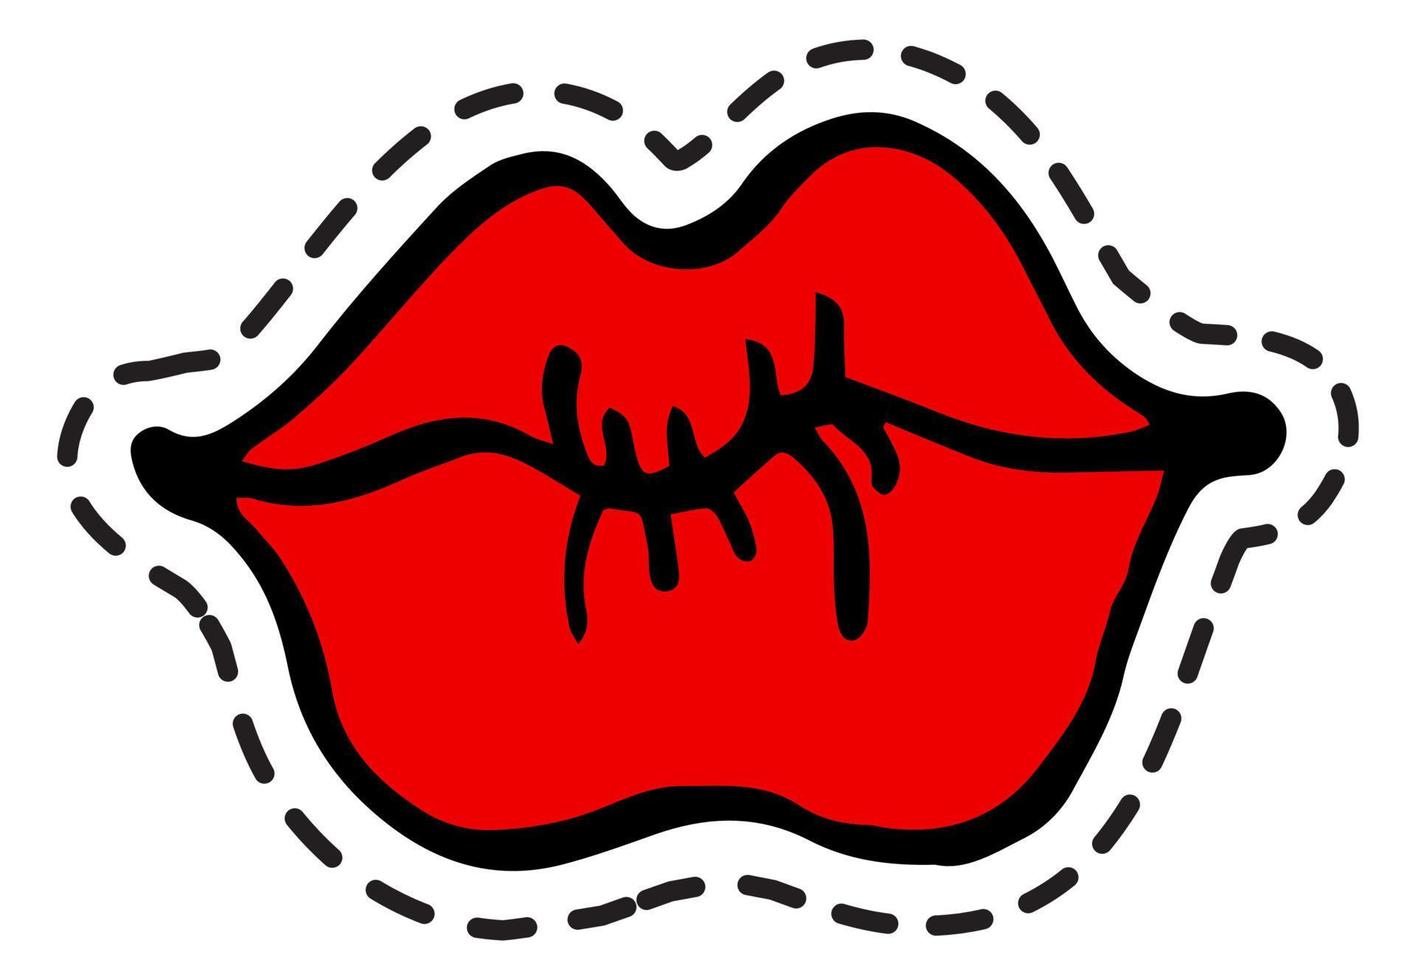 Kissing lips, romantic feelings sticker or icon vector